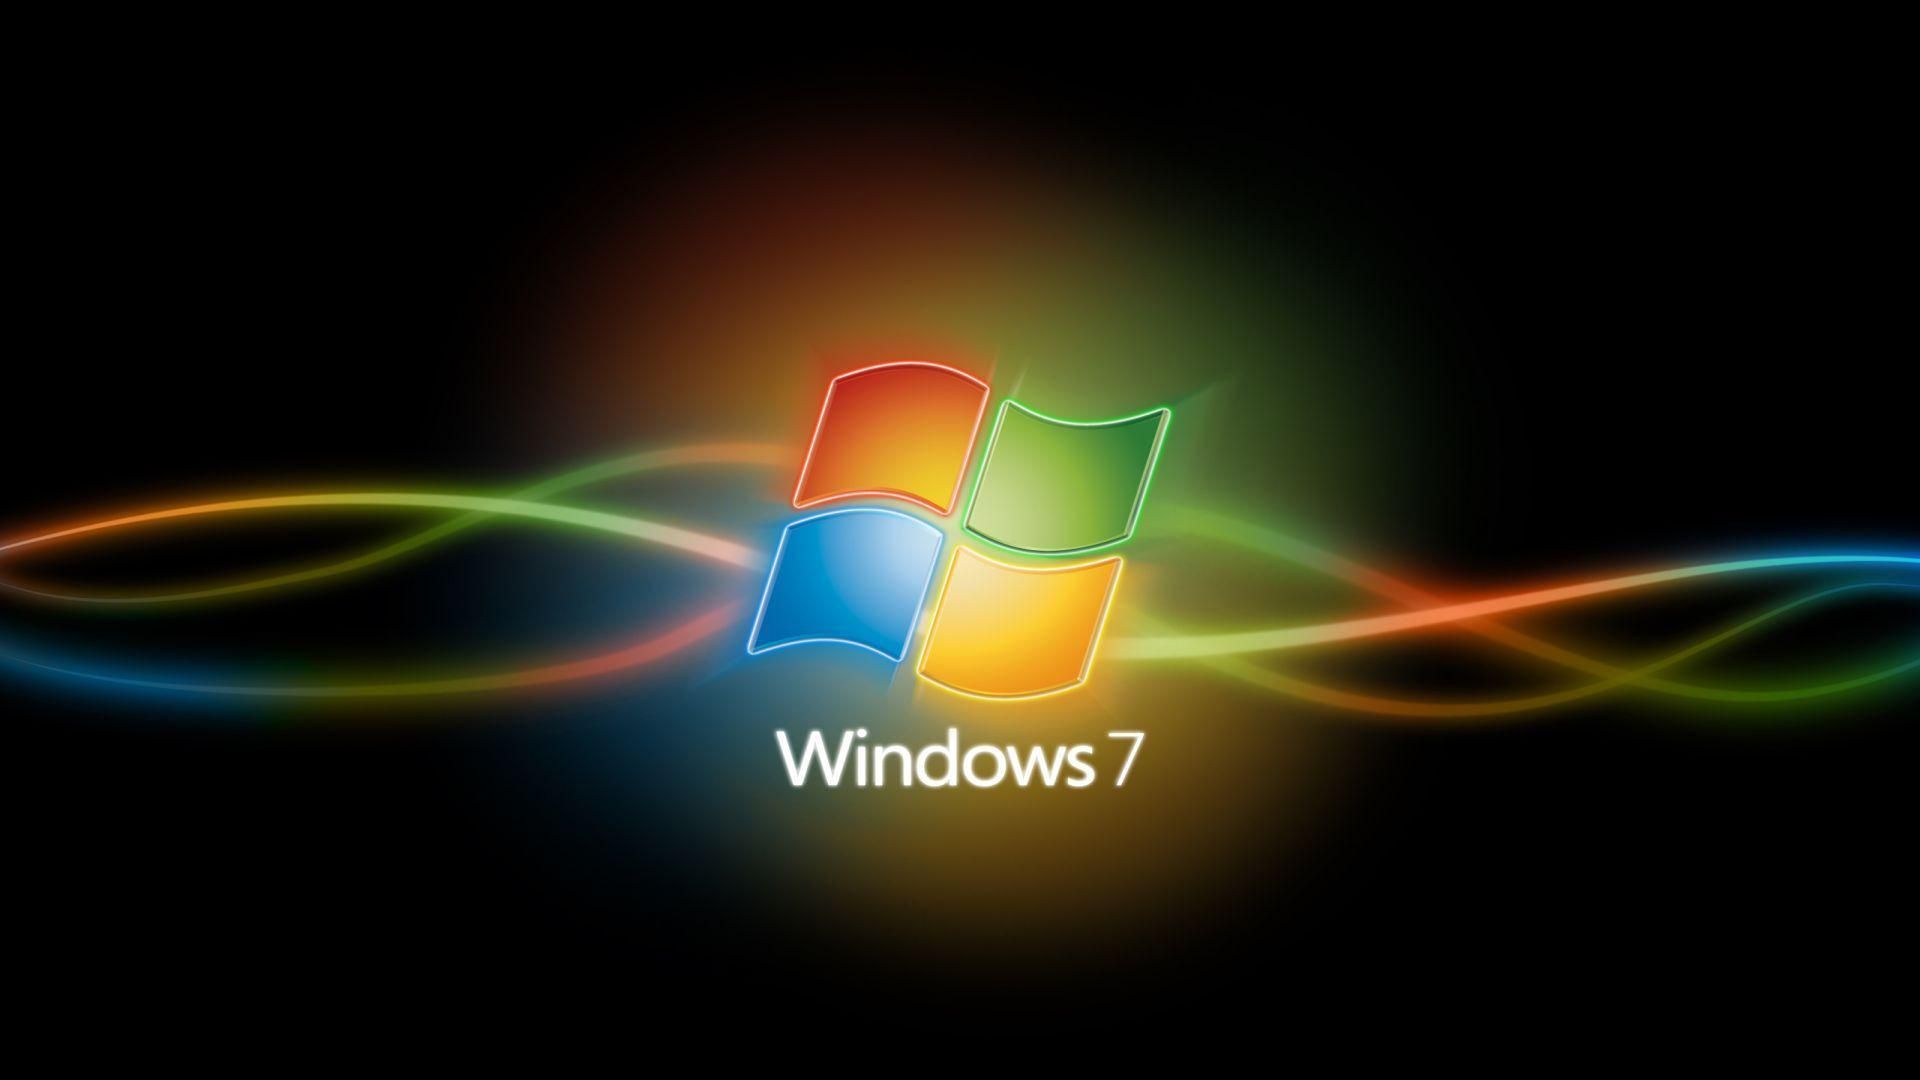 Windows Computers Windows 7 7 HD Wallpapers, Desktop Backgrounds ...